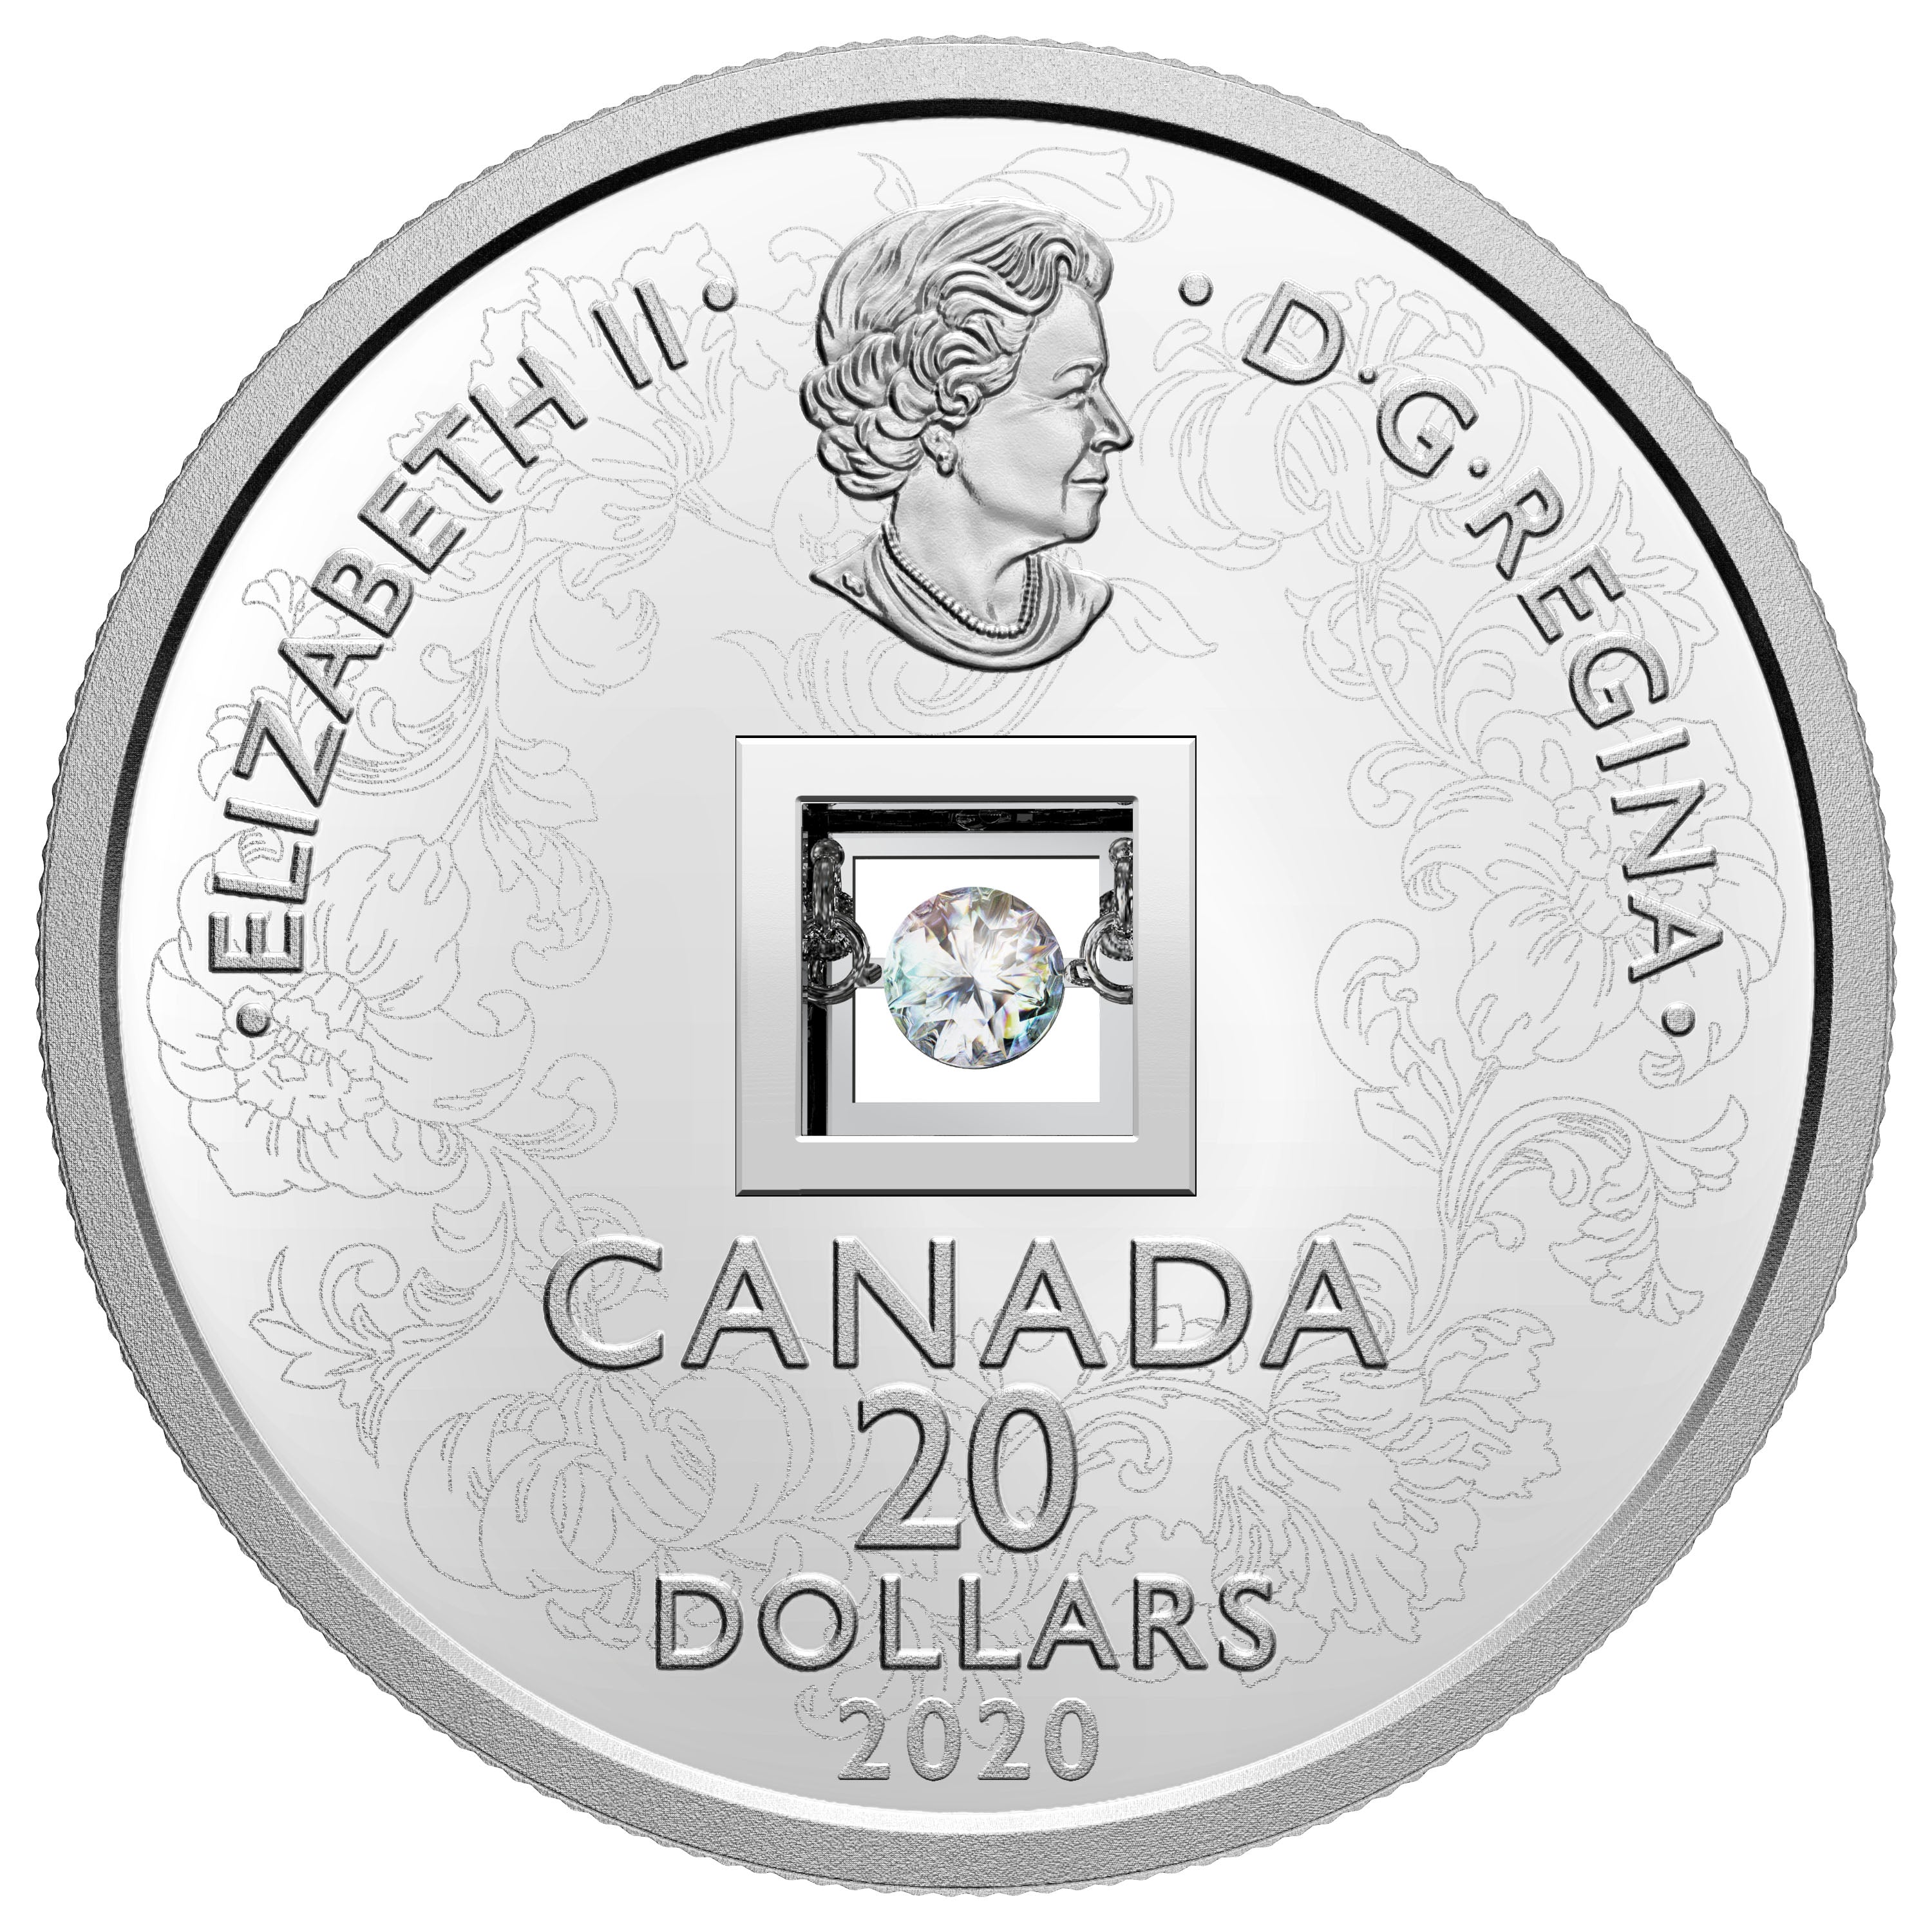 SPARKLE OF THE HEART Dancing Diamond Silver Coin $20 Canada 2020